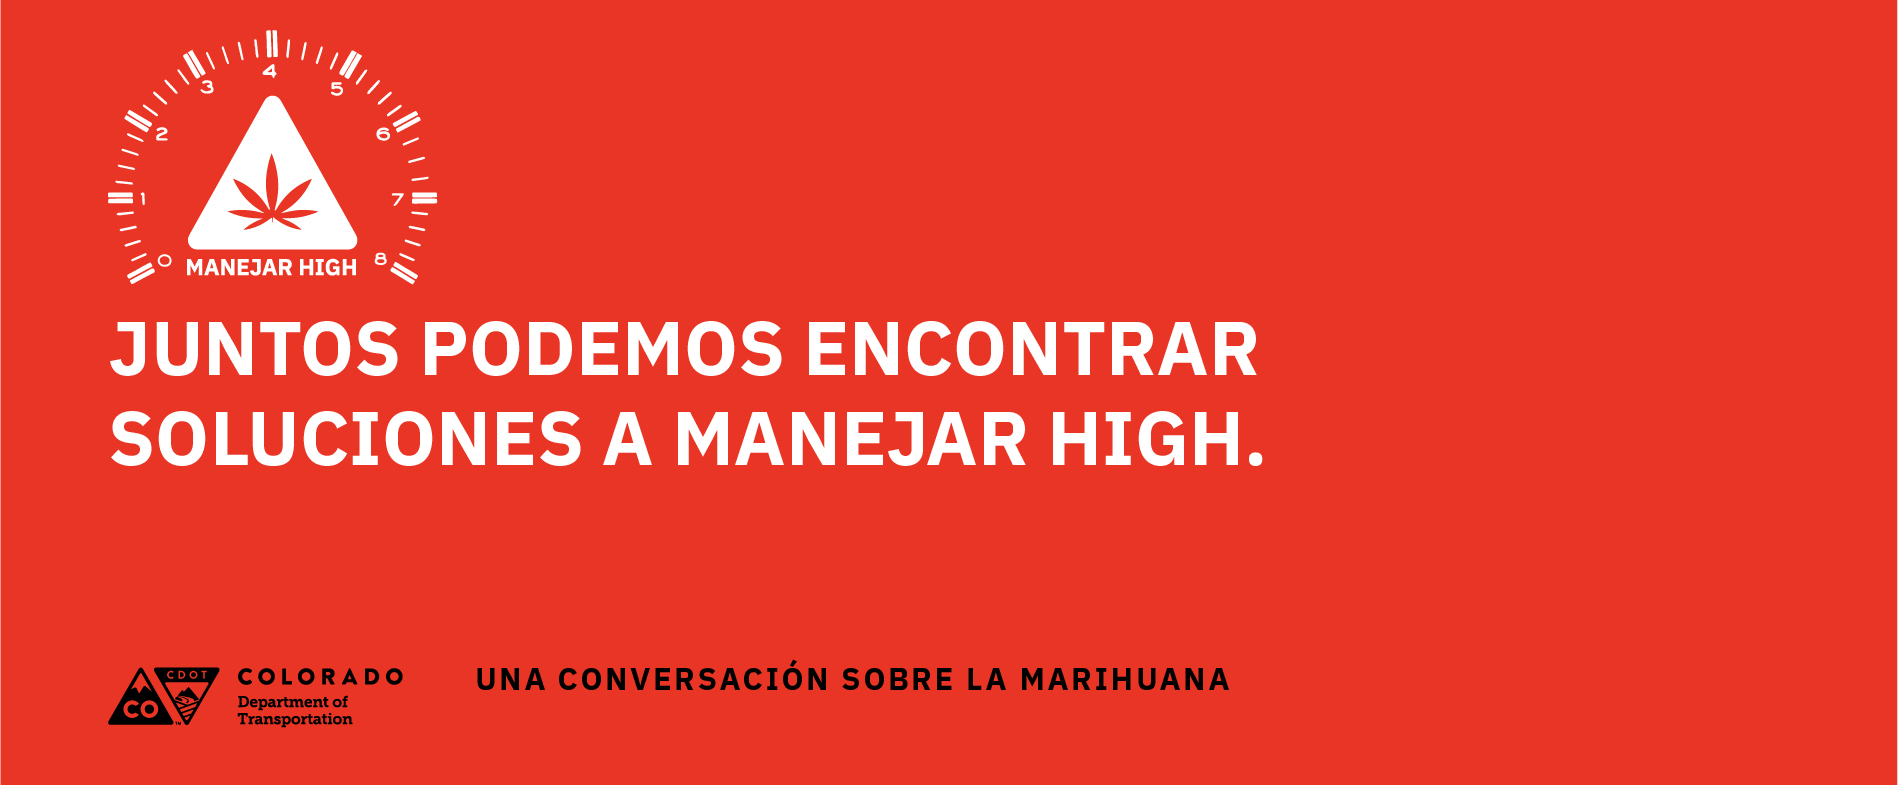 CD038_CannabisConversations_GraphicKit_Mech_v1_Spanish_Horizontal_G.jpg detail image